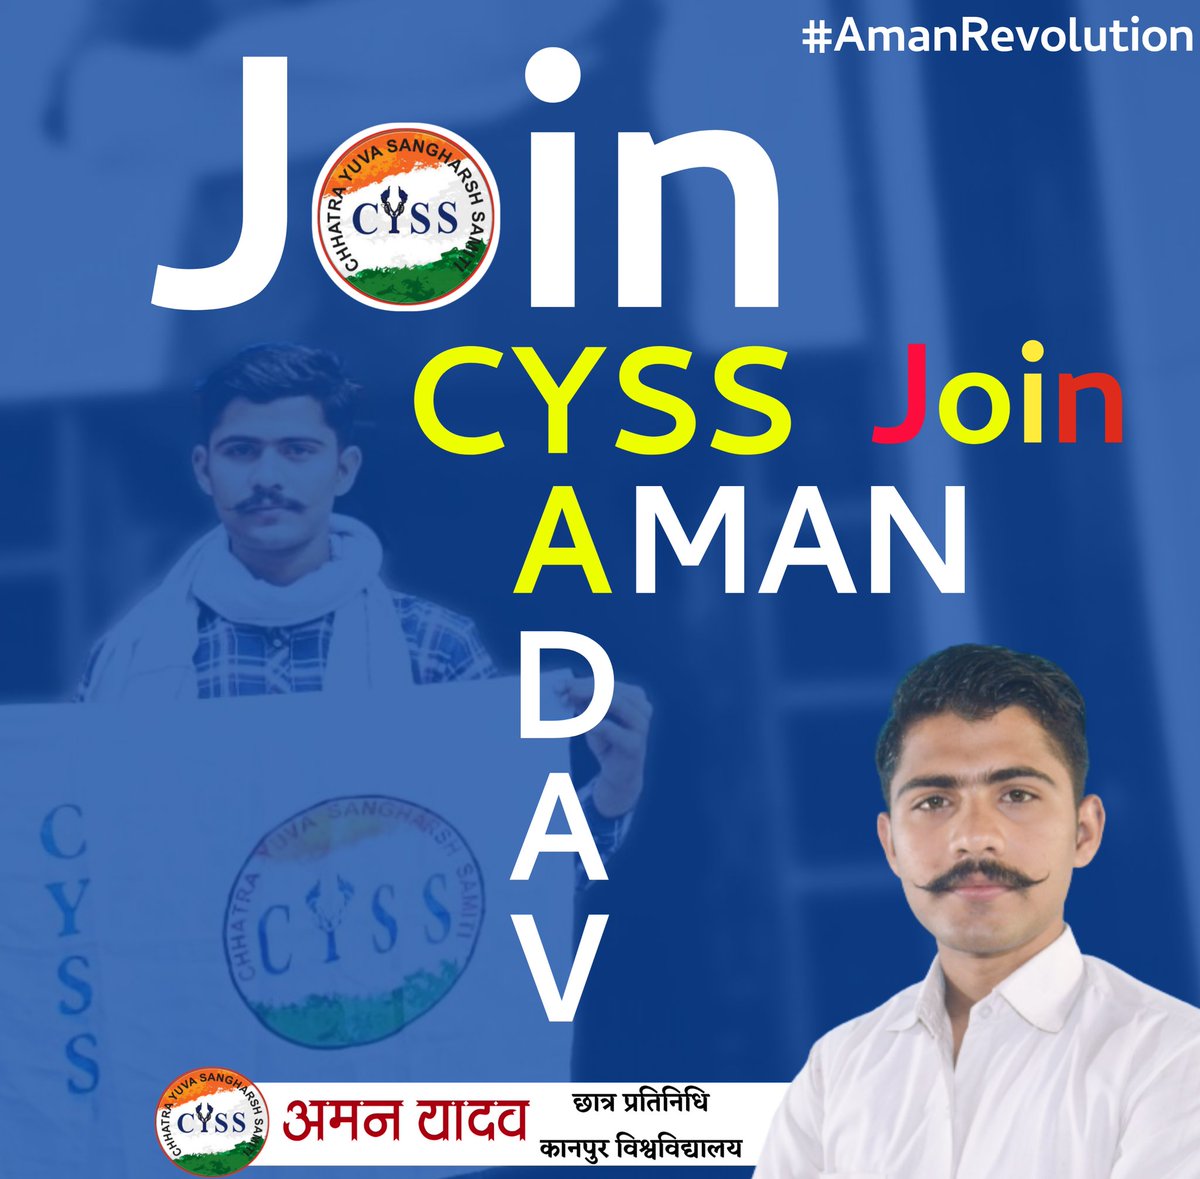 #AmanRevolution
#UpCyss

JOIN CYSS BE A COMPLETE STUDENT CSJMU..!! 🔥🔥

@VanshrajDubey
@upcyss
@ashutoshss 
@cyssnational 
@Anuragendra 
@SanjayAzadSln 
@CSJM_University 
@imushirsiddiqui